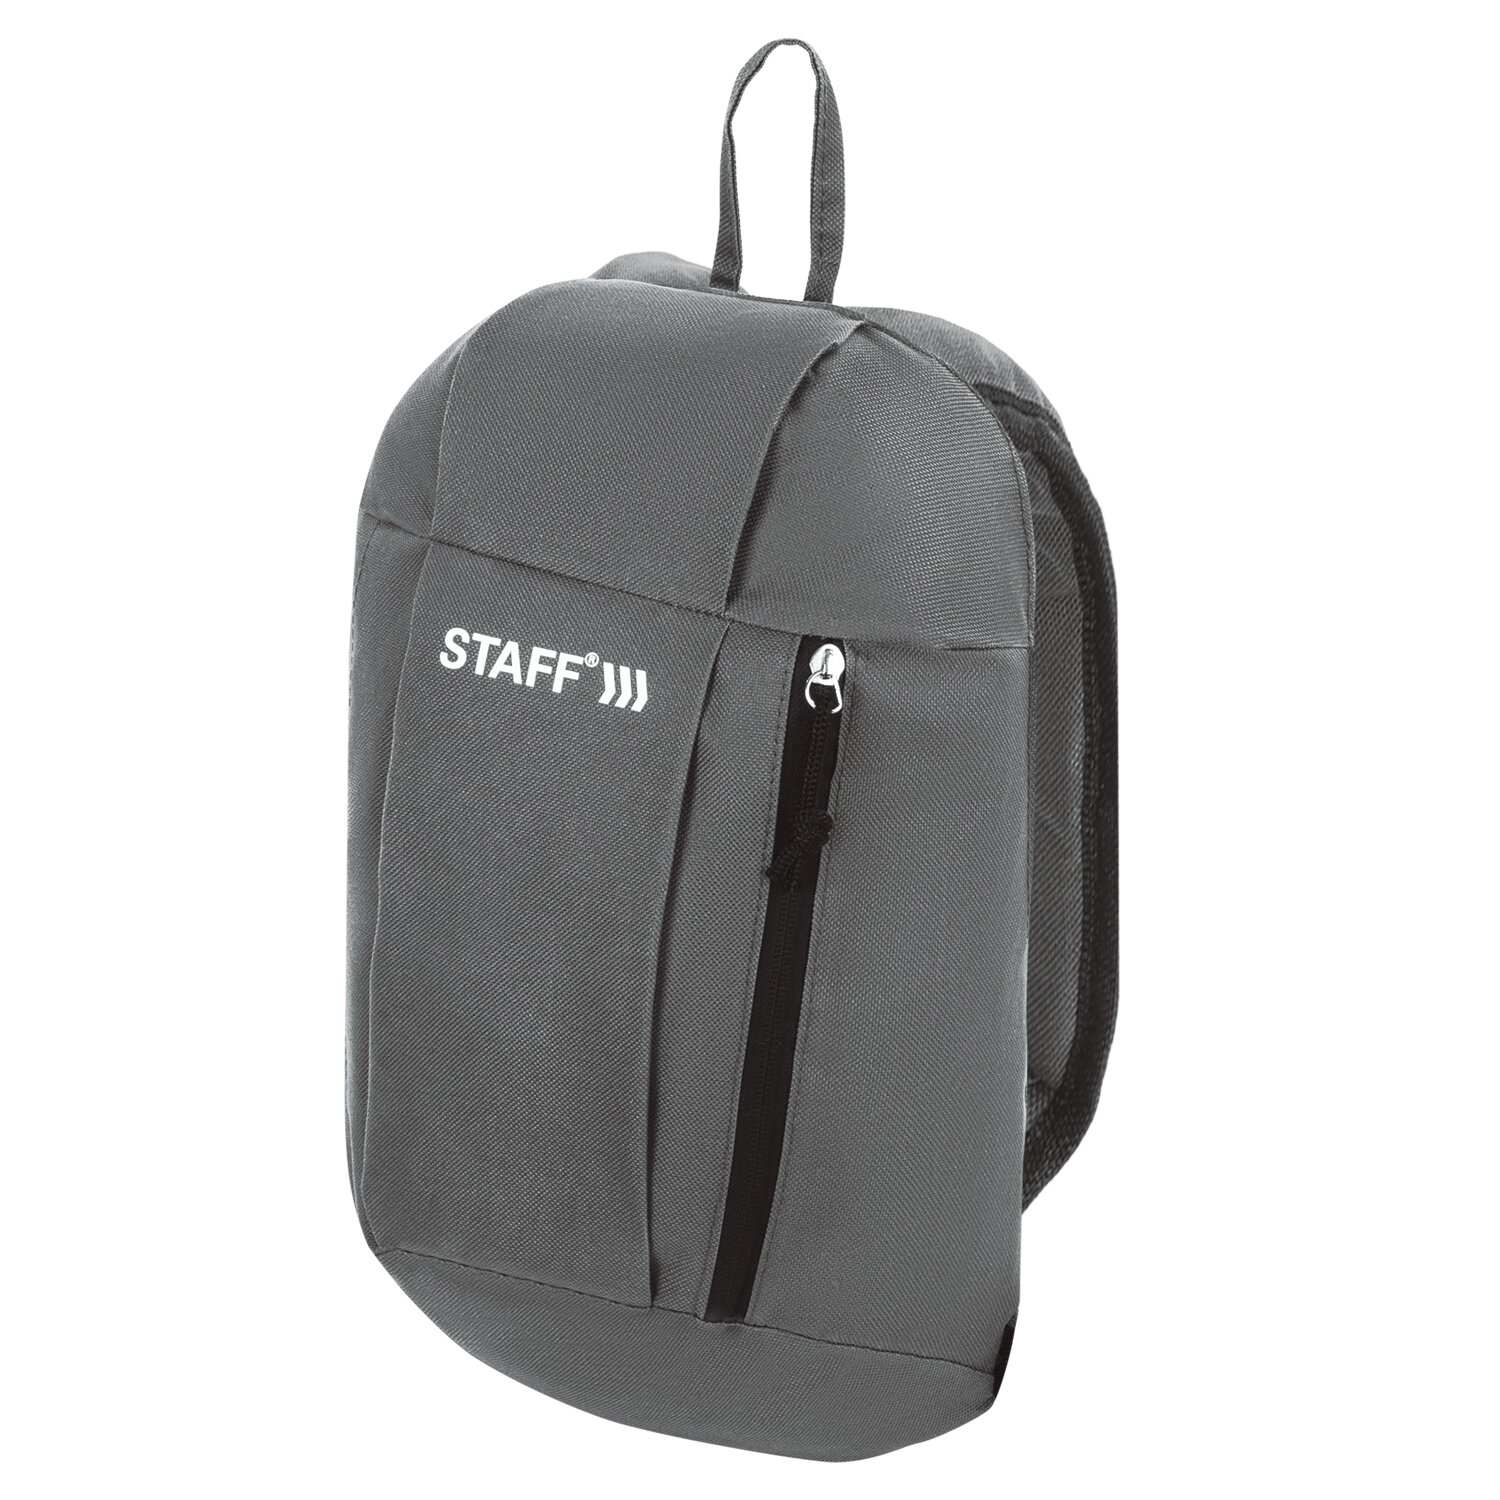 Рюкзак STAFF AIR компактный серый 270292 - Саратов 